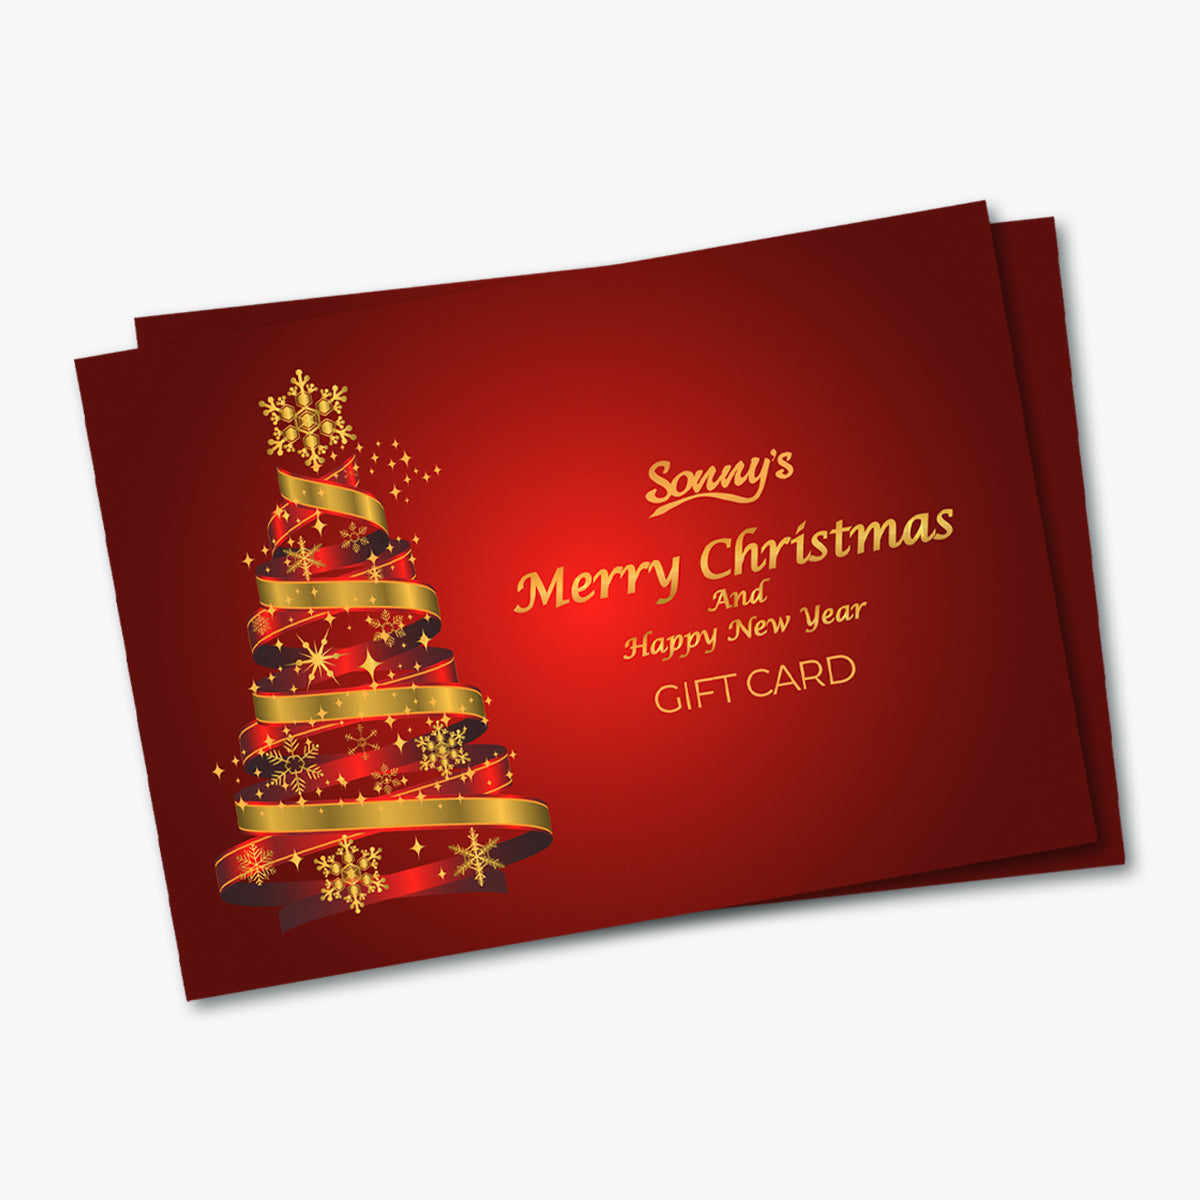 Sonny's christmas gift card with christmas tree